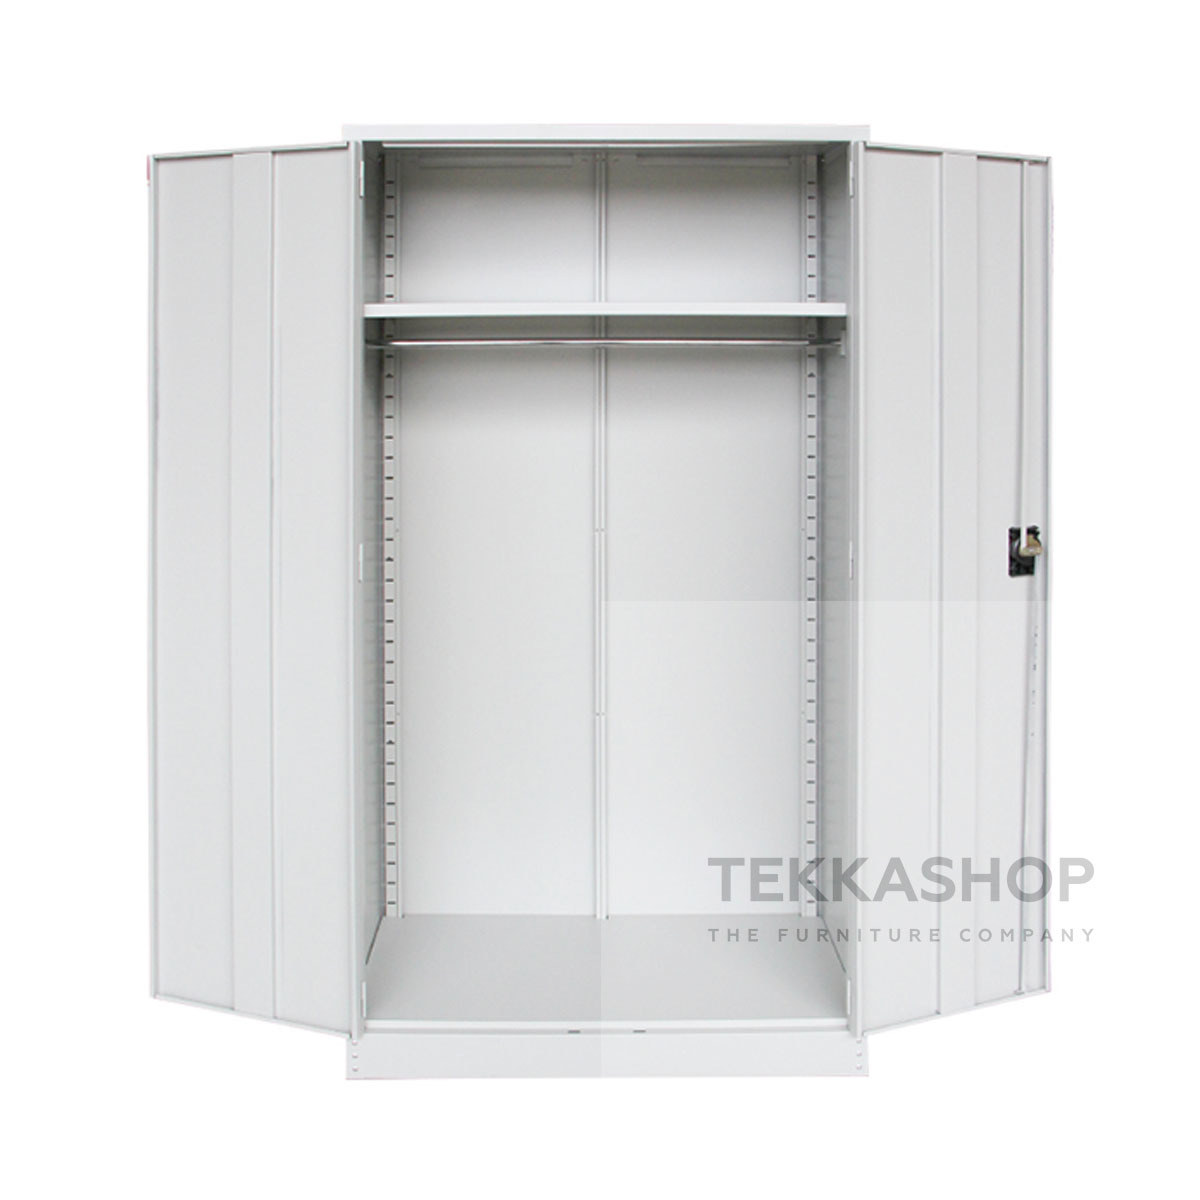 Tekkashop Sls199 Full Height Metal Wardrobe Cabinet Storage With 2